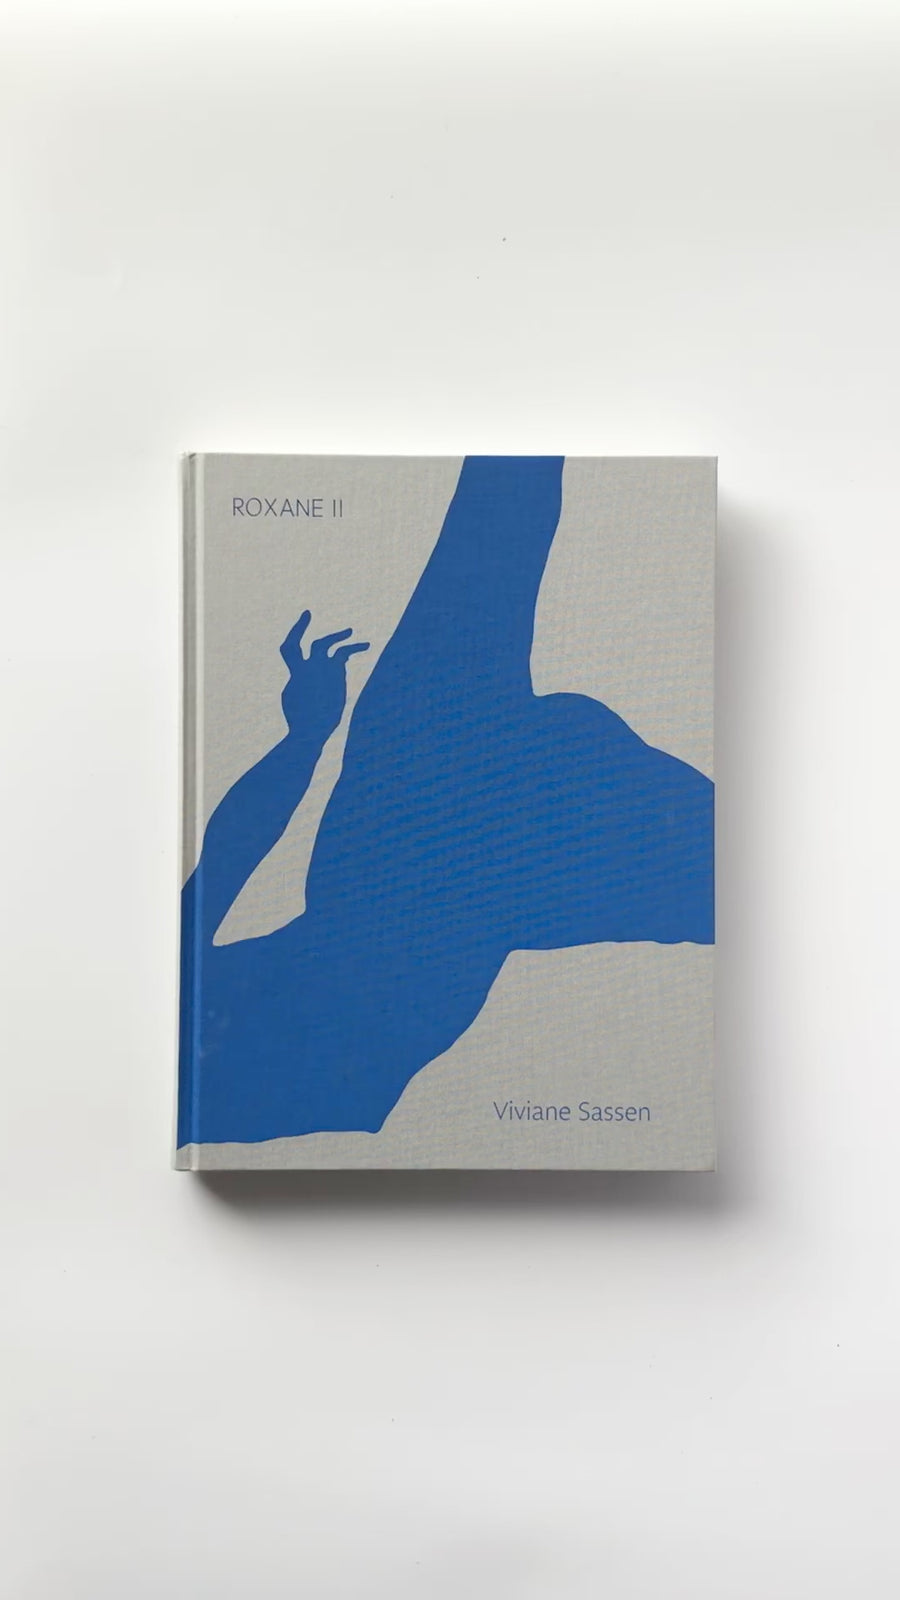 (First Edition, First Printing) ROXANE II by Viviane Sassen